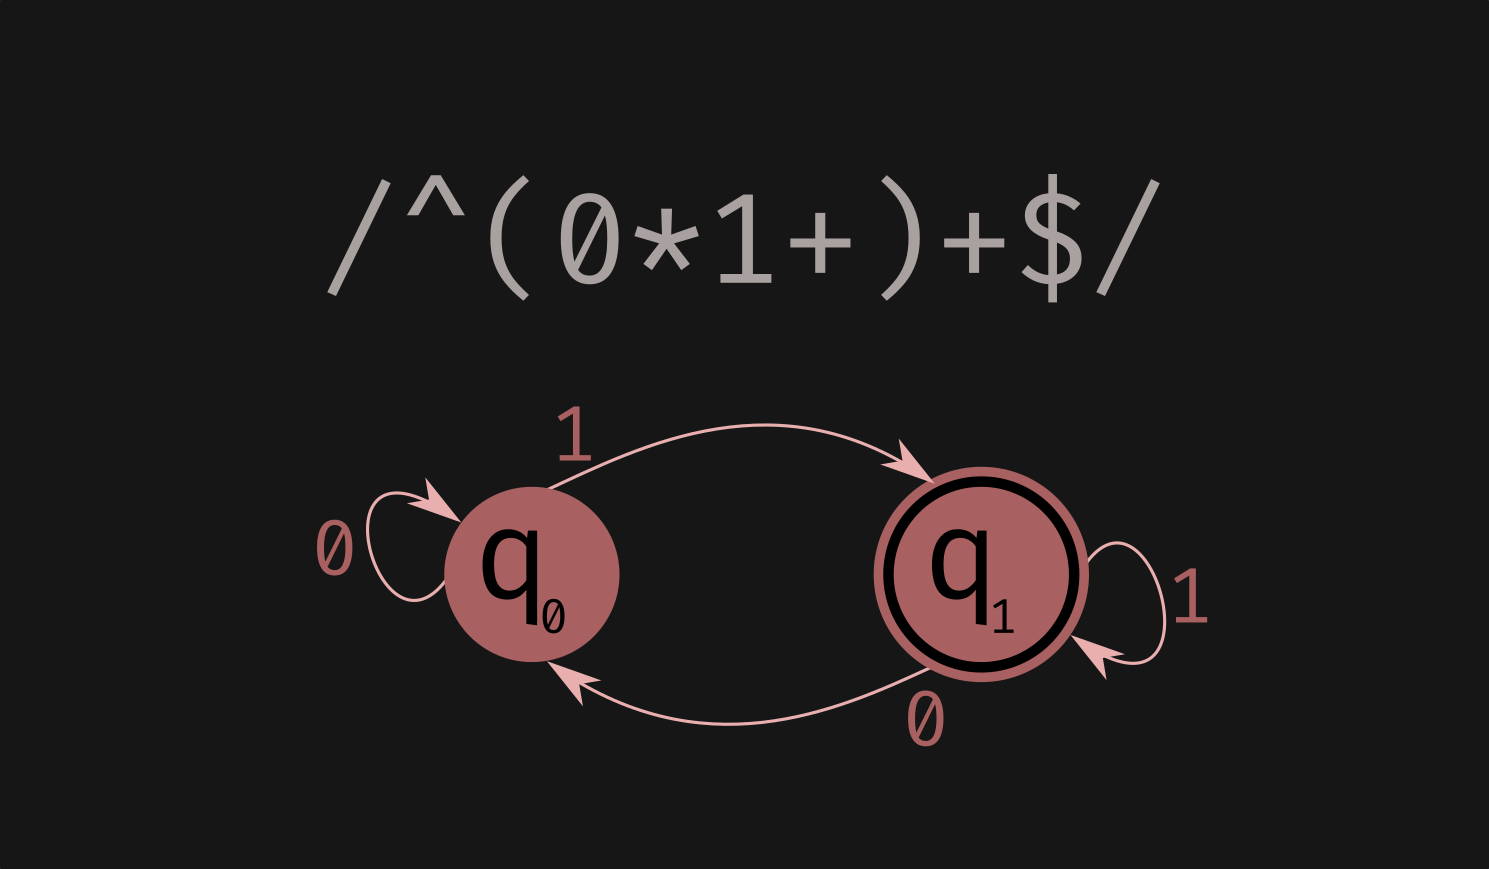 An example finite state automaton, demonstrating /^(0*1+)+$/ JavaScript regex